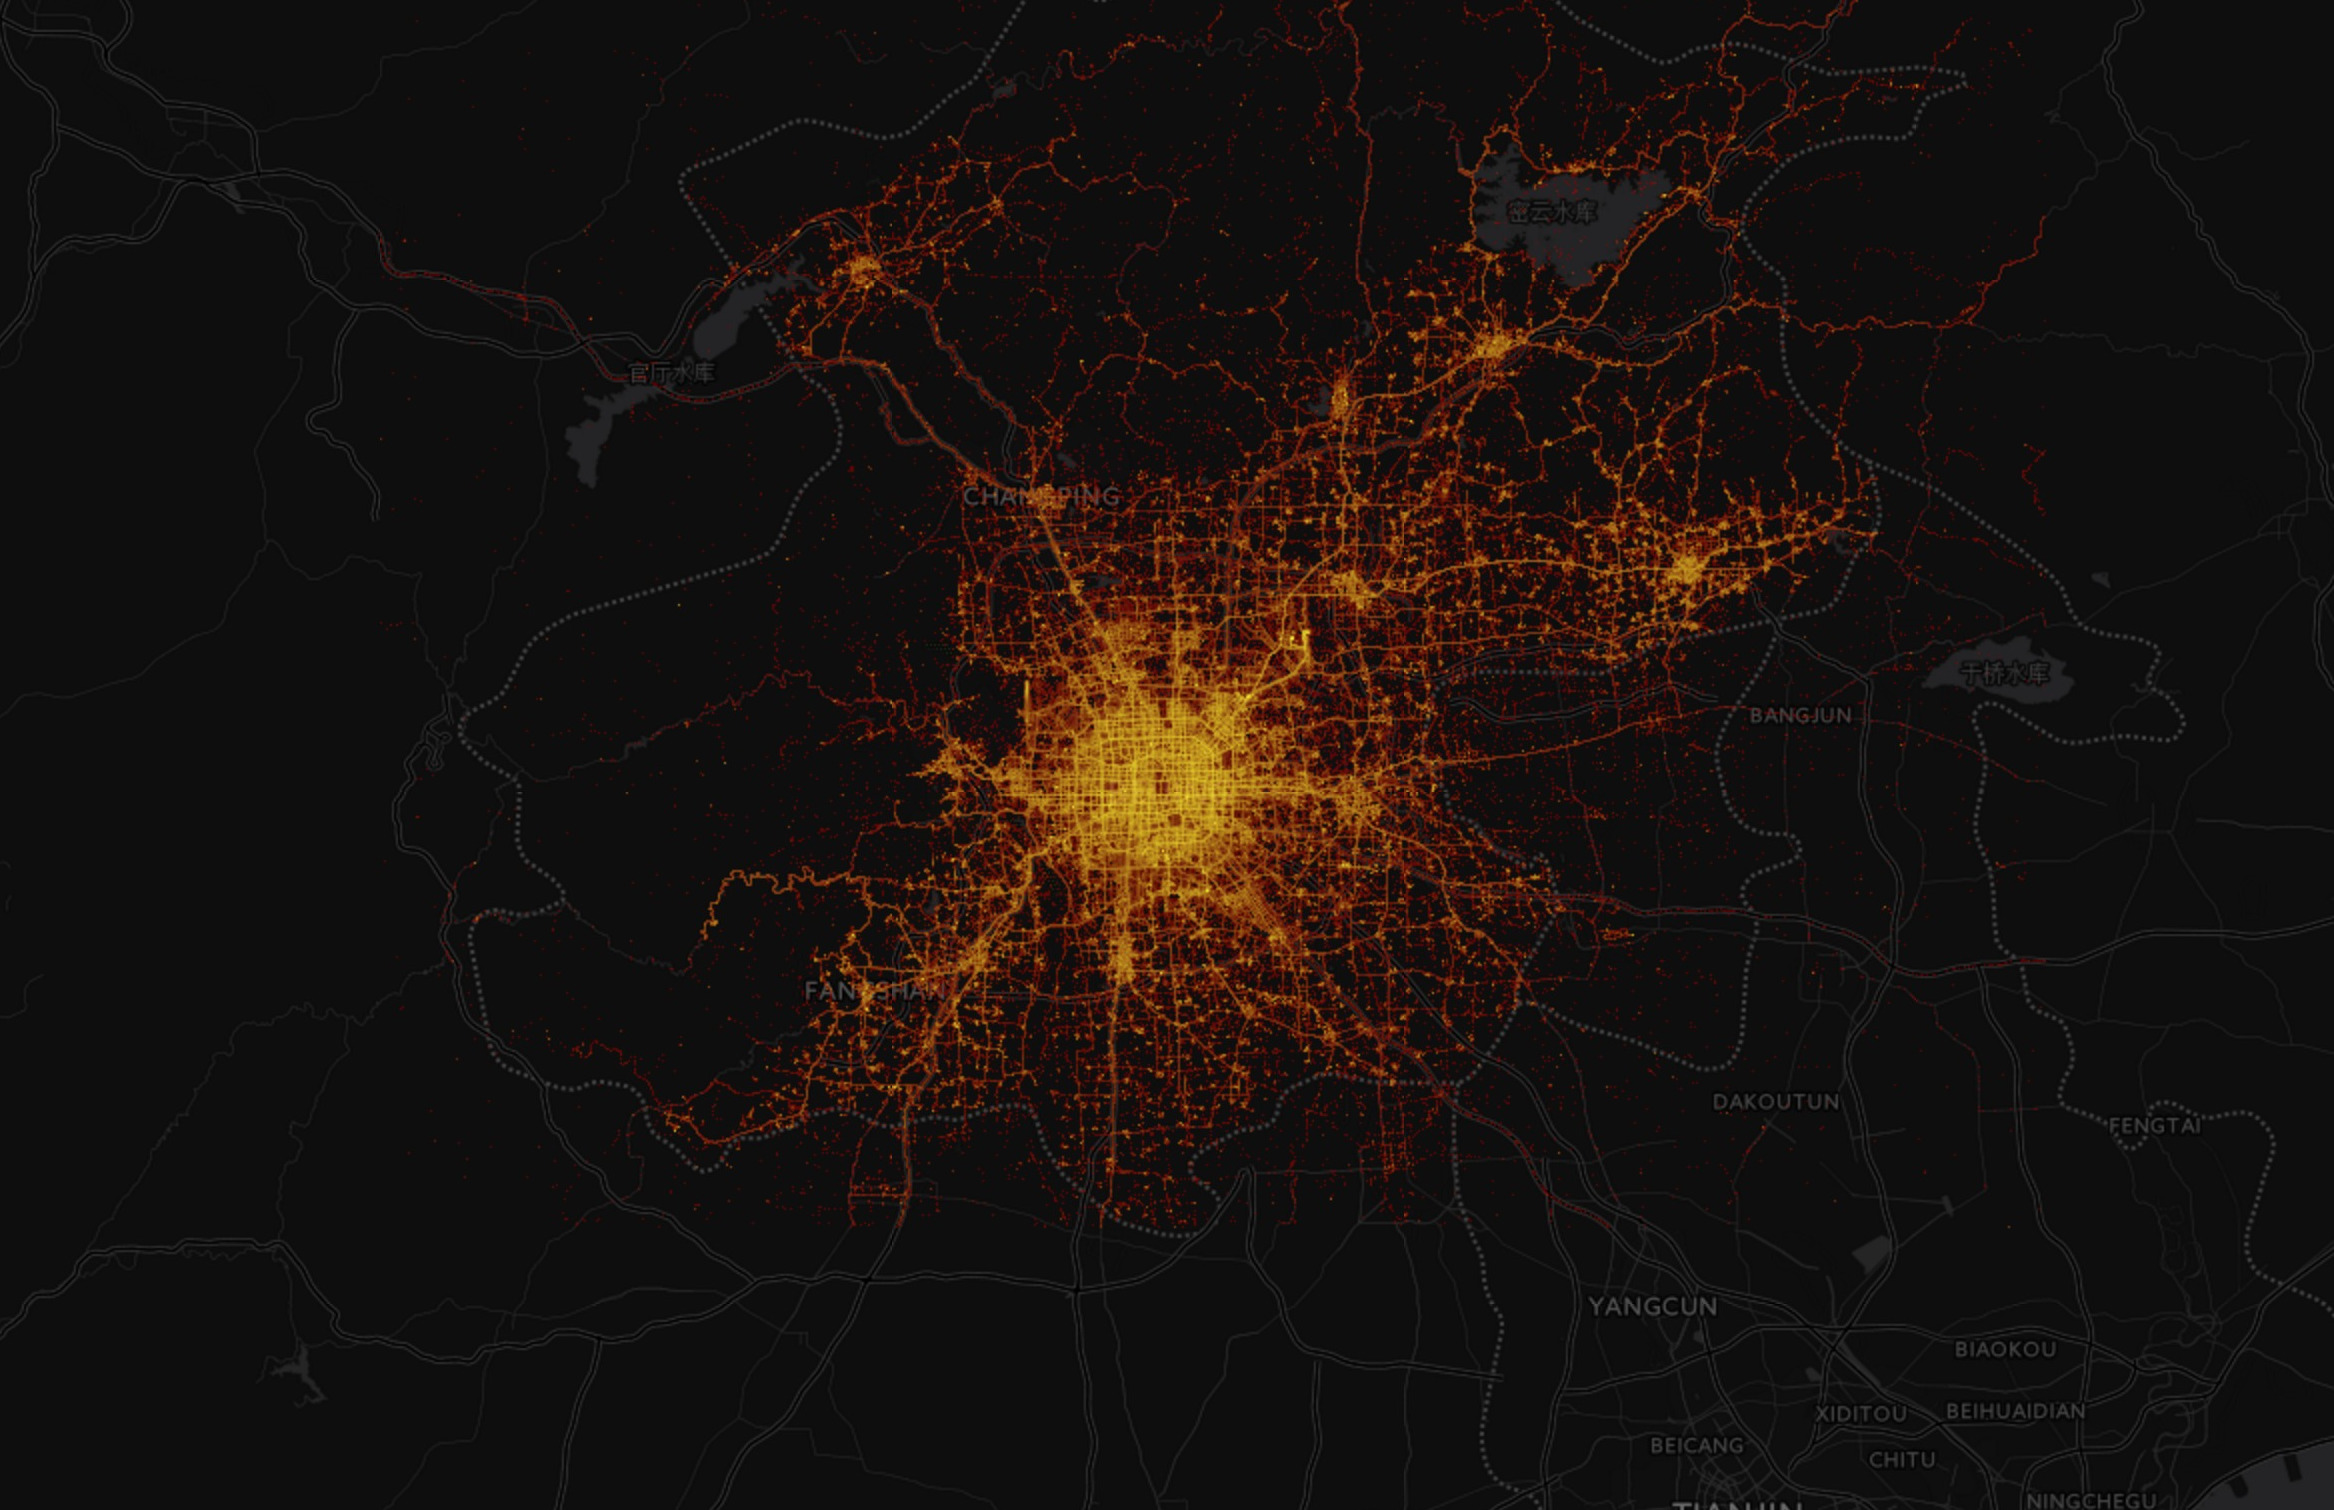 T-Drive trajectory dataset of 15 million data points visualzed over Beijing